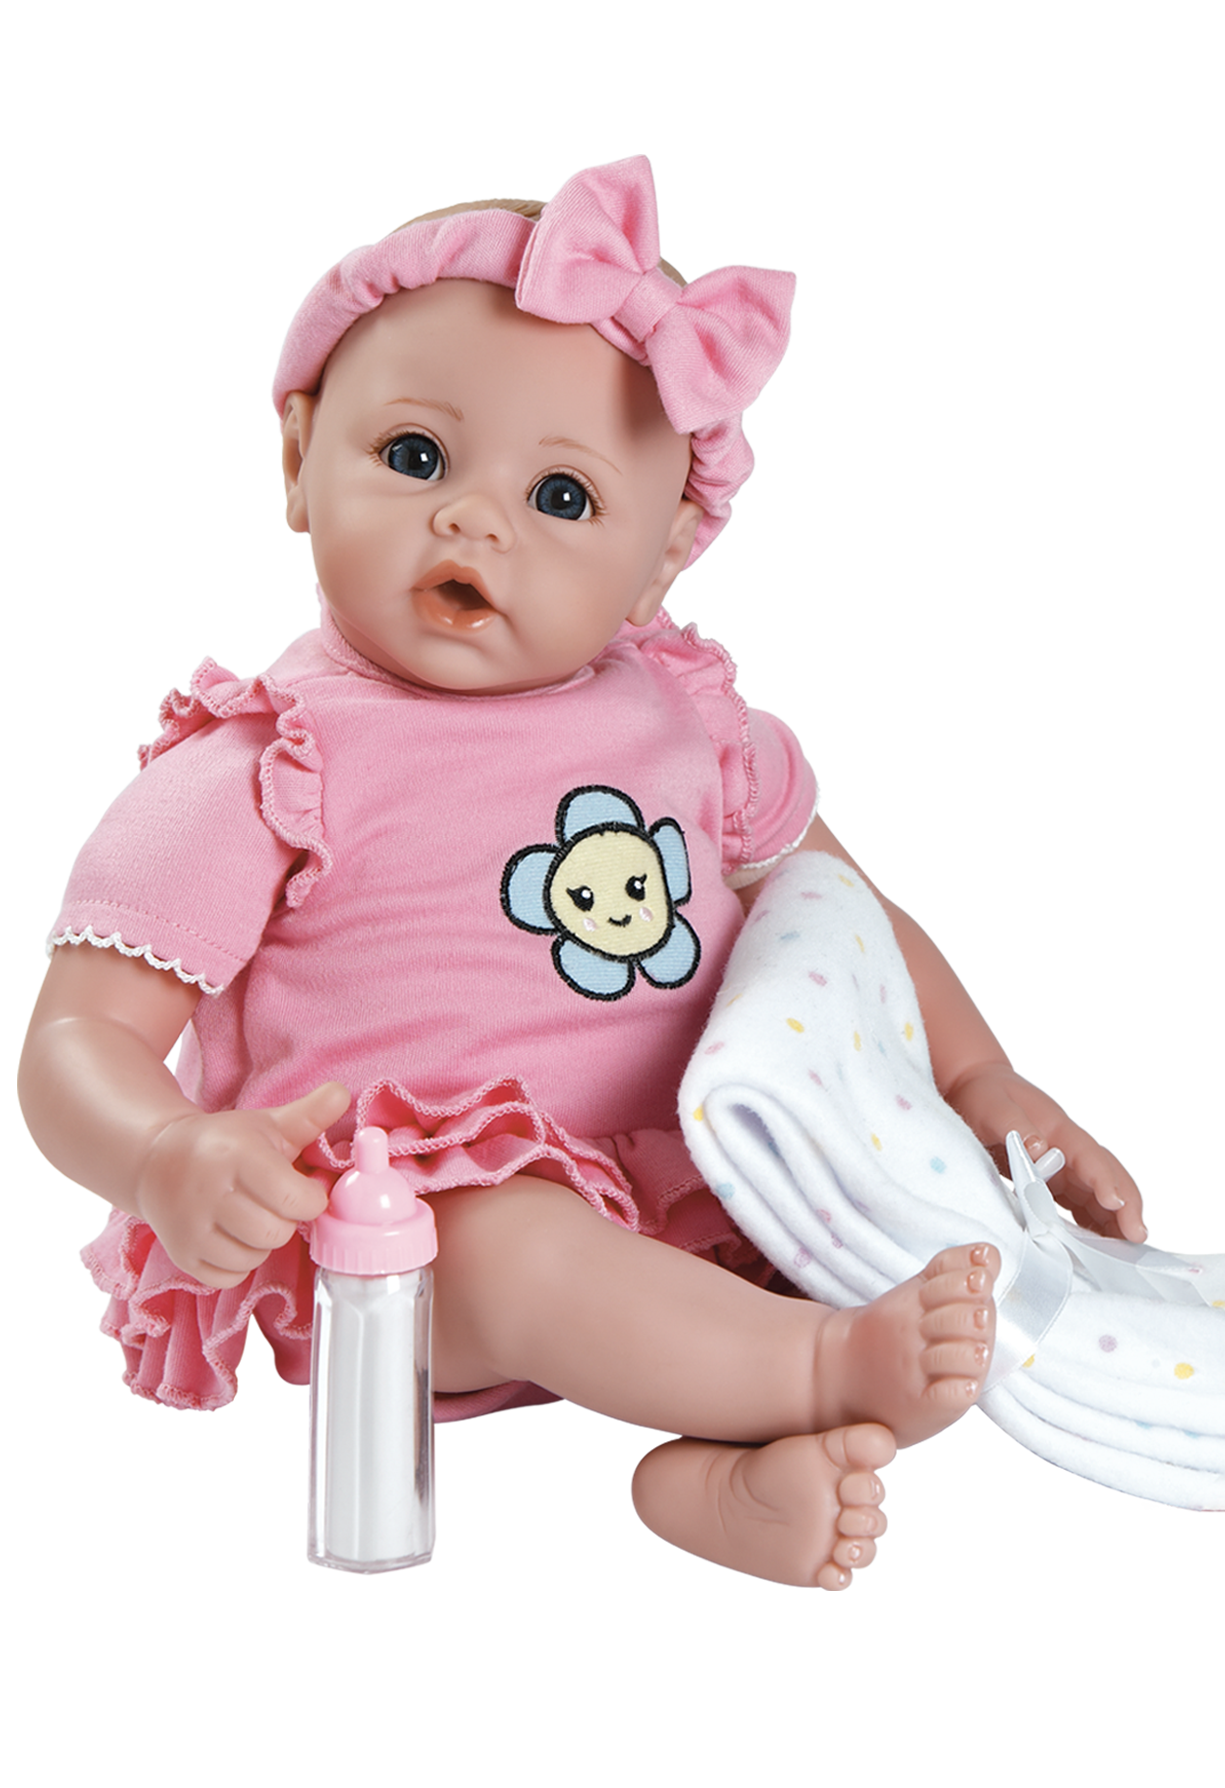 24" Reborn Baby Dolls Handmade Toddler Vinyl Silicone Baby ...